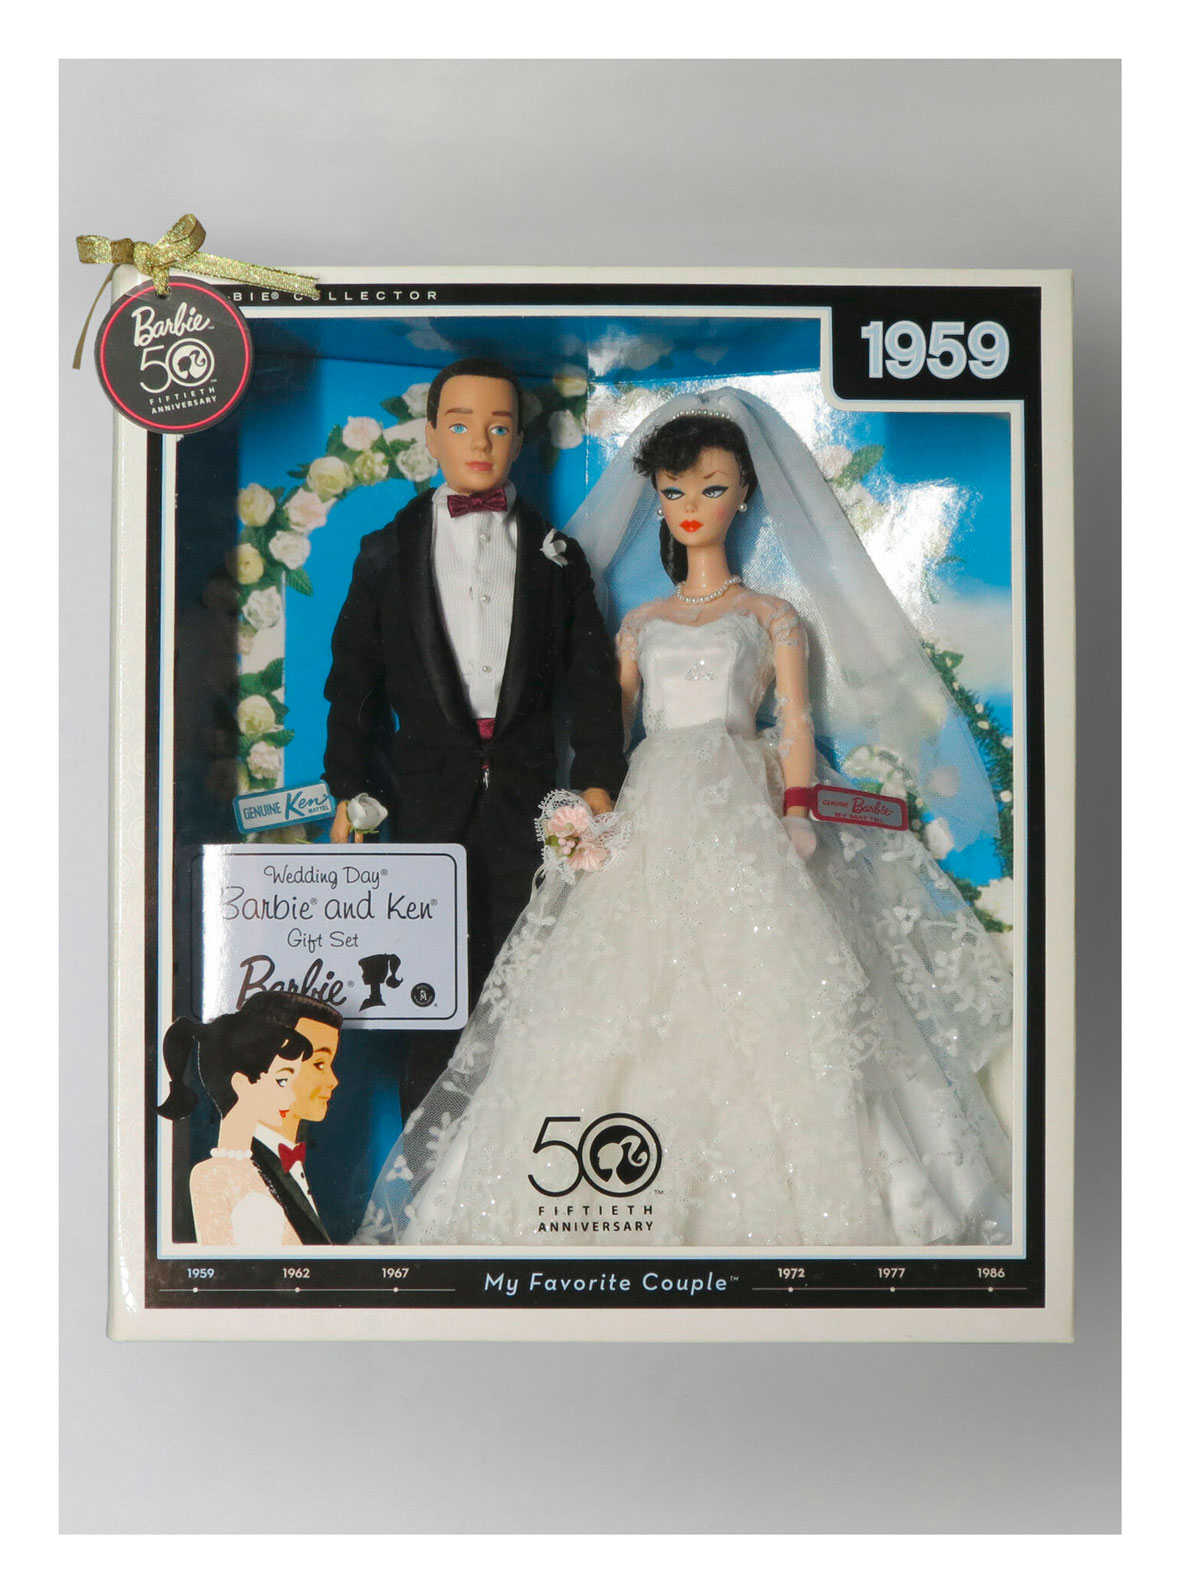 2009 Wedding Day (Barbie 50th Anniversary) in original packaging